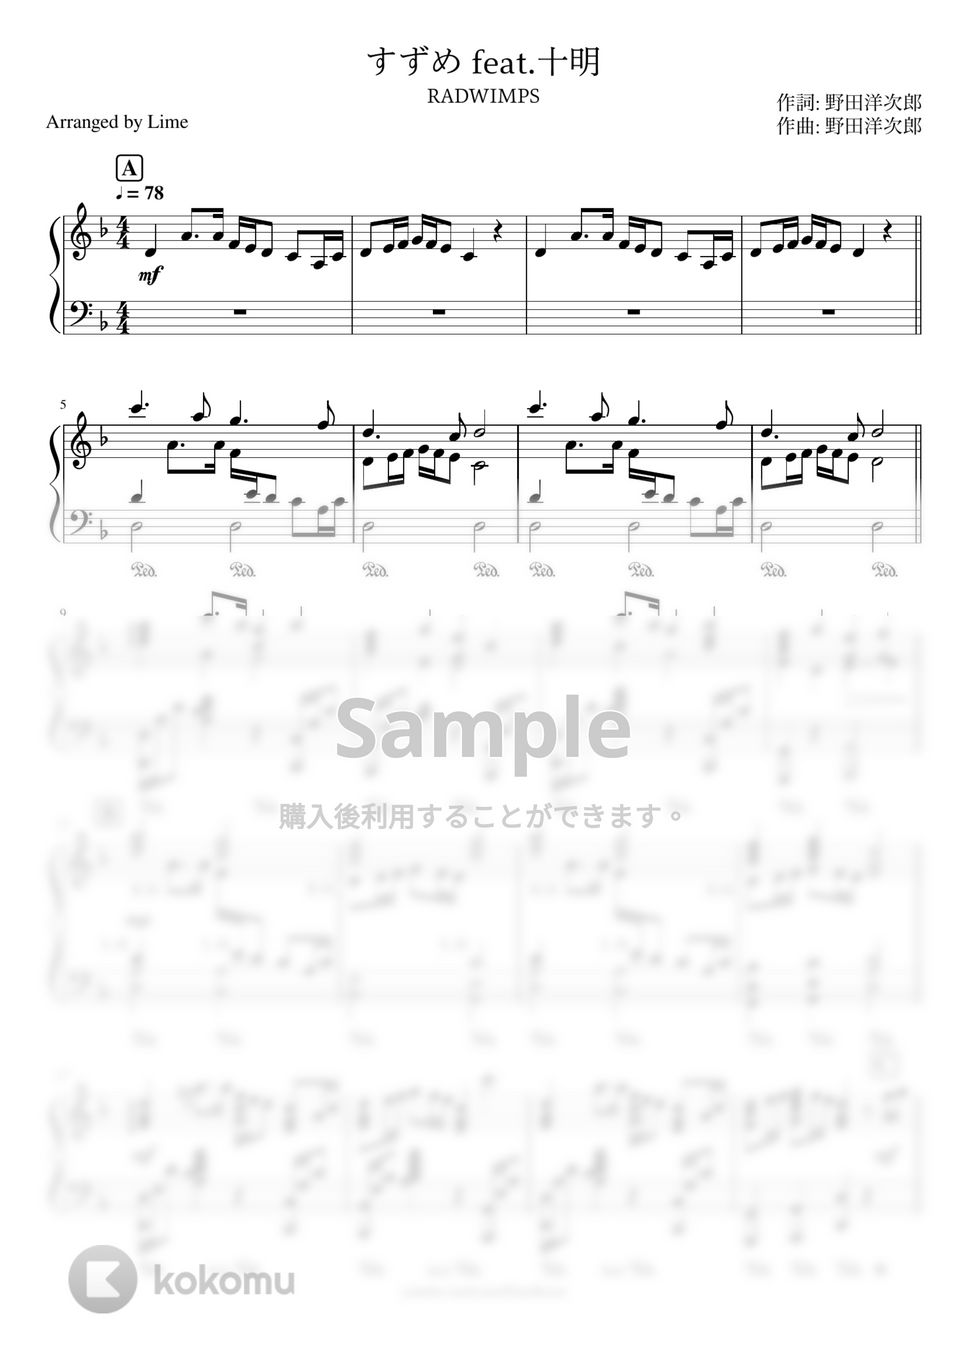 RADWIMPS - すずめ feat.十明 (すずめの戸締まり 主題歌) by Lime's Piano Room